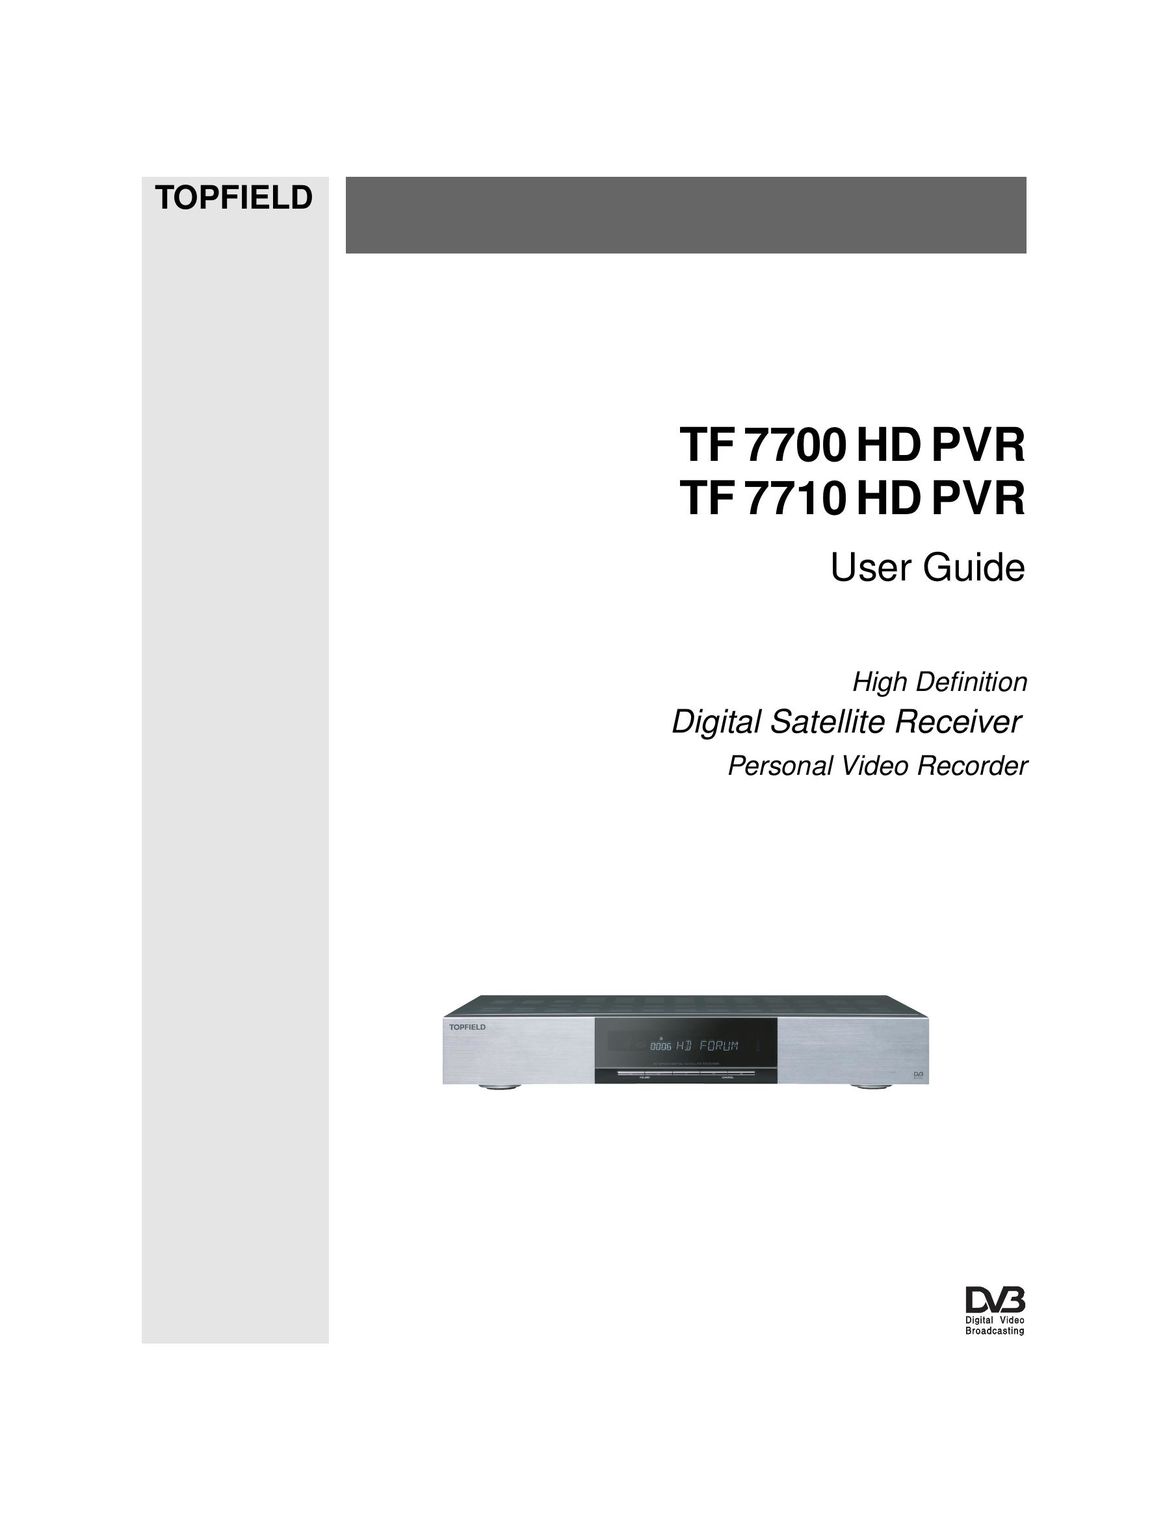 Topfield High Definition Digital Satellite Receiver Personal Video Recorder TV Receiver User Manual